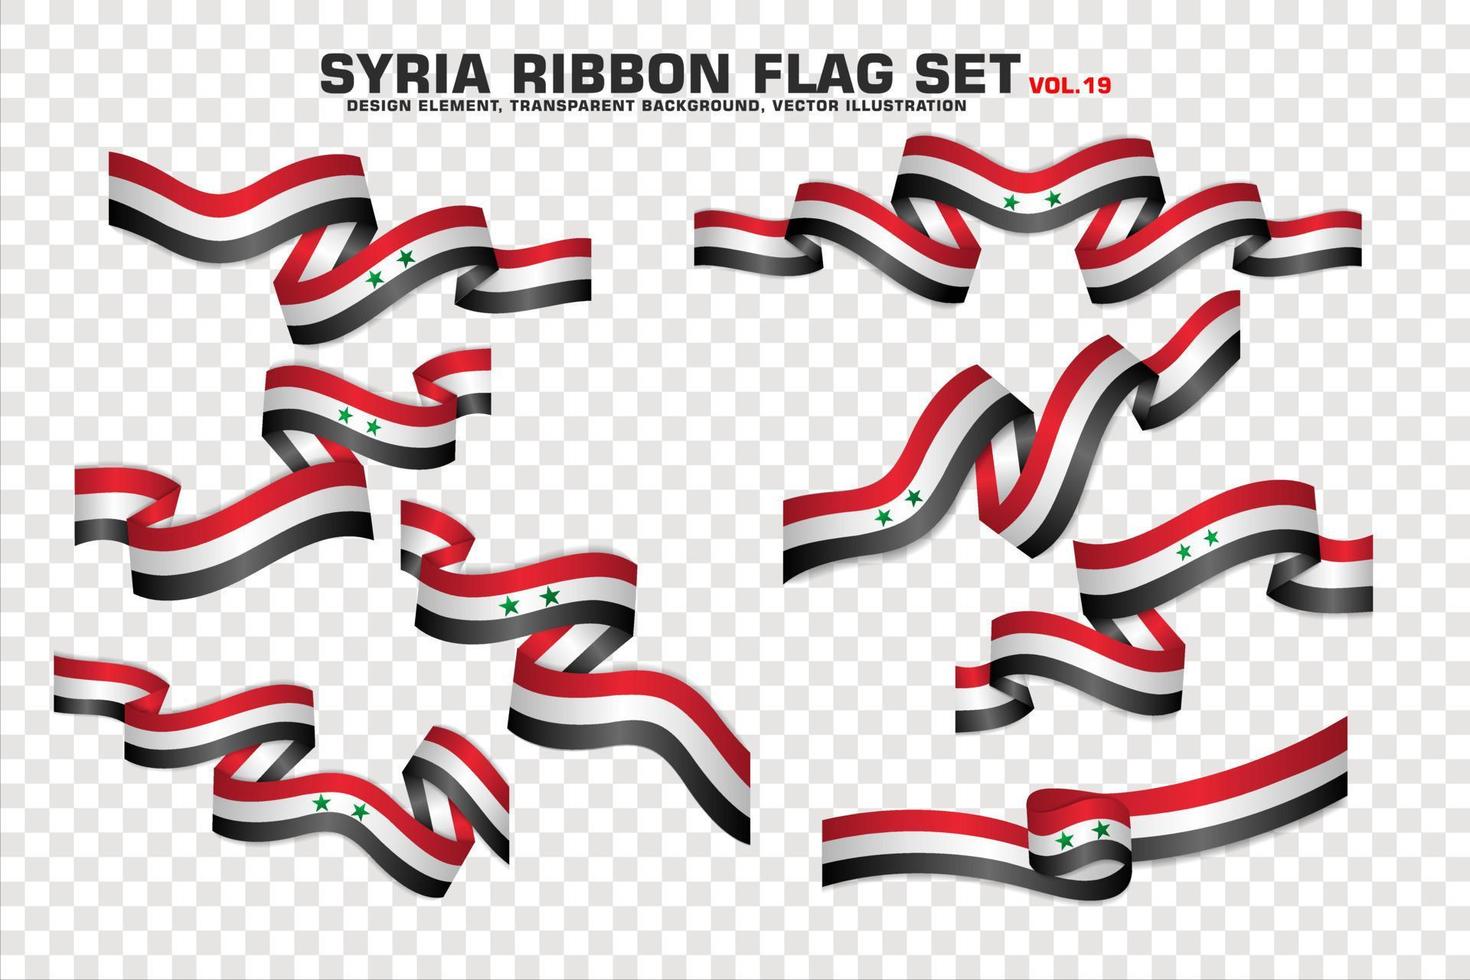 Syria Ribbon Flags Set, Element design, 3D style. vector Illustration